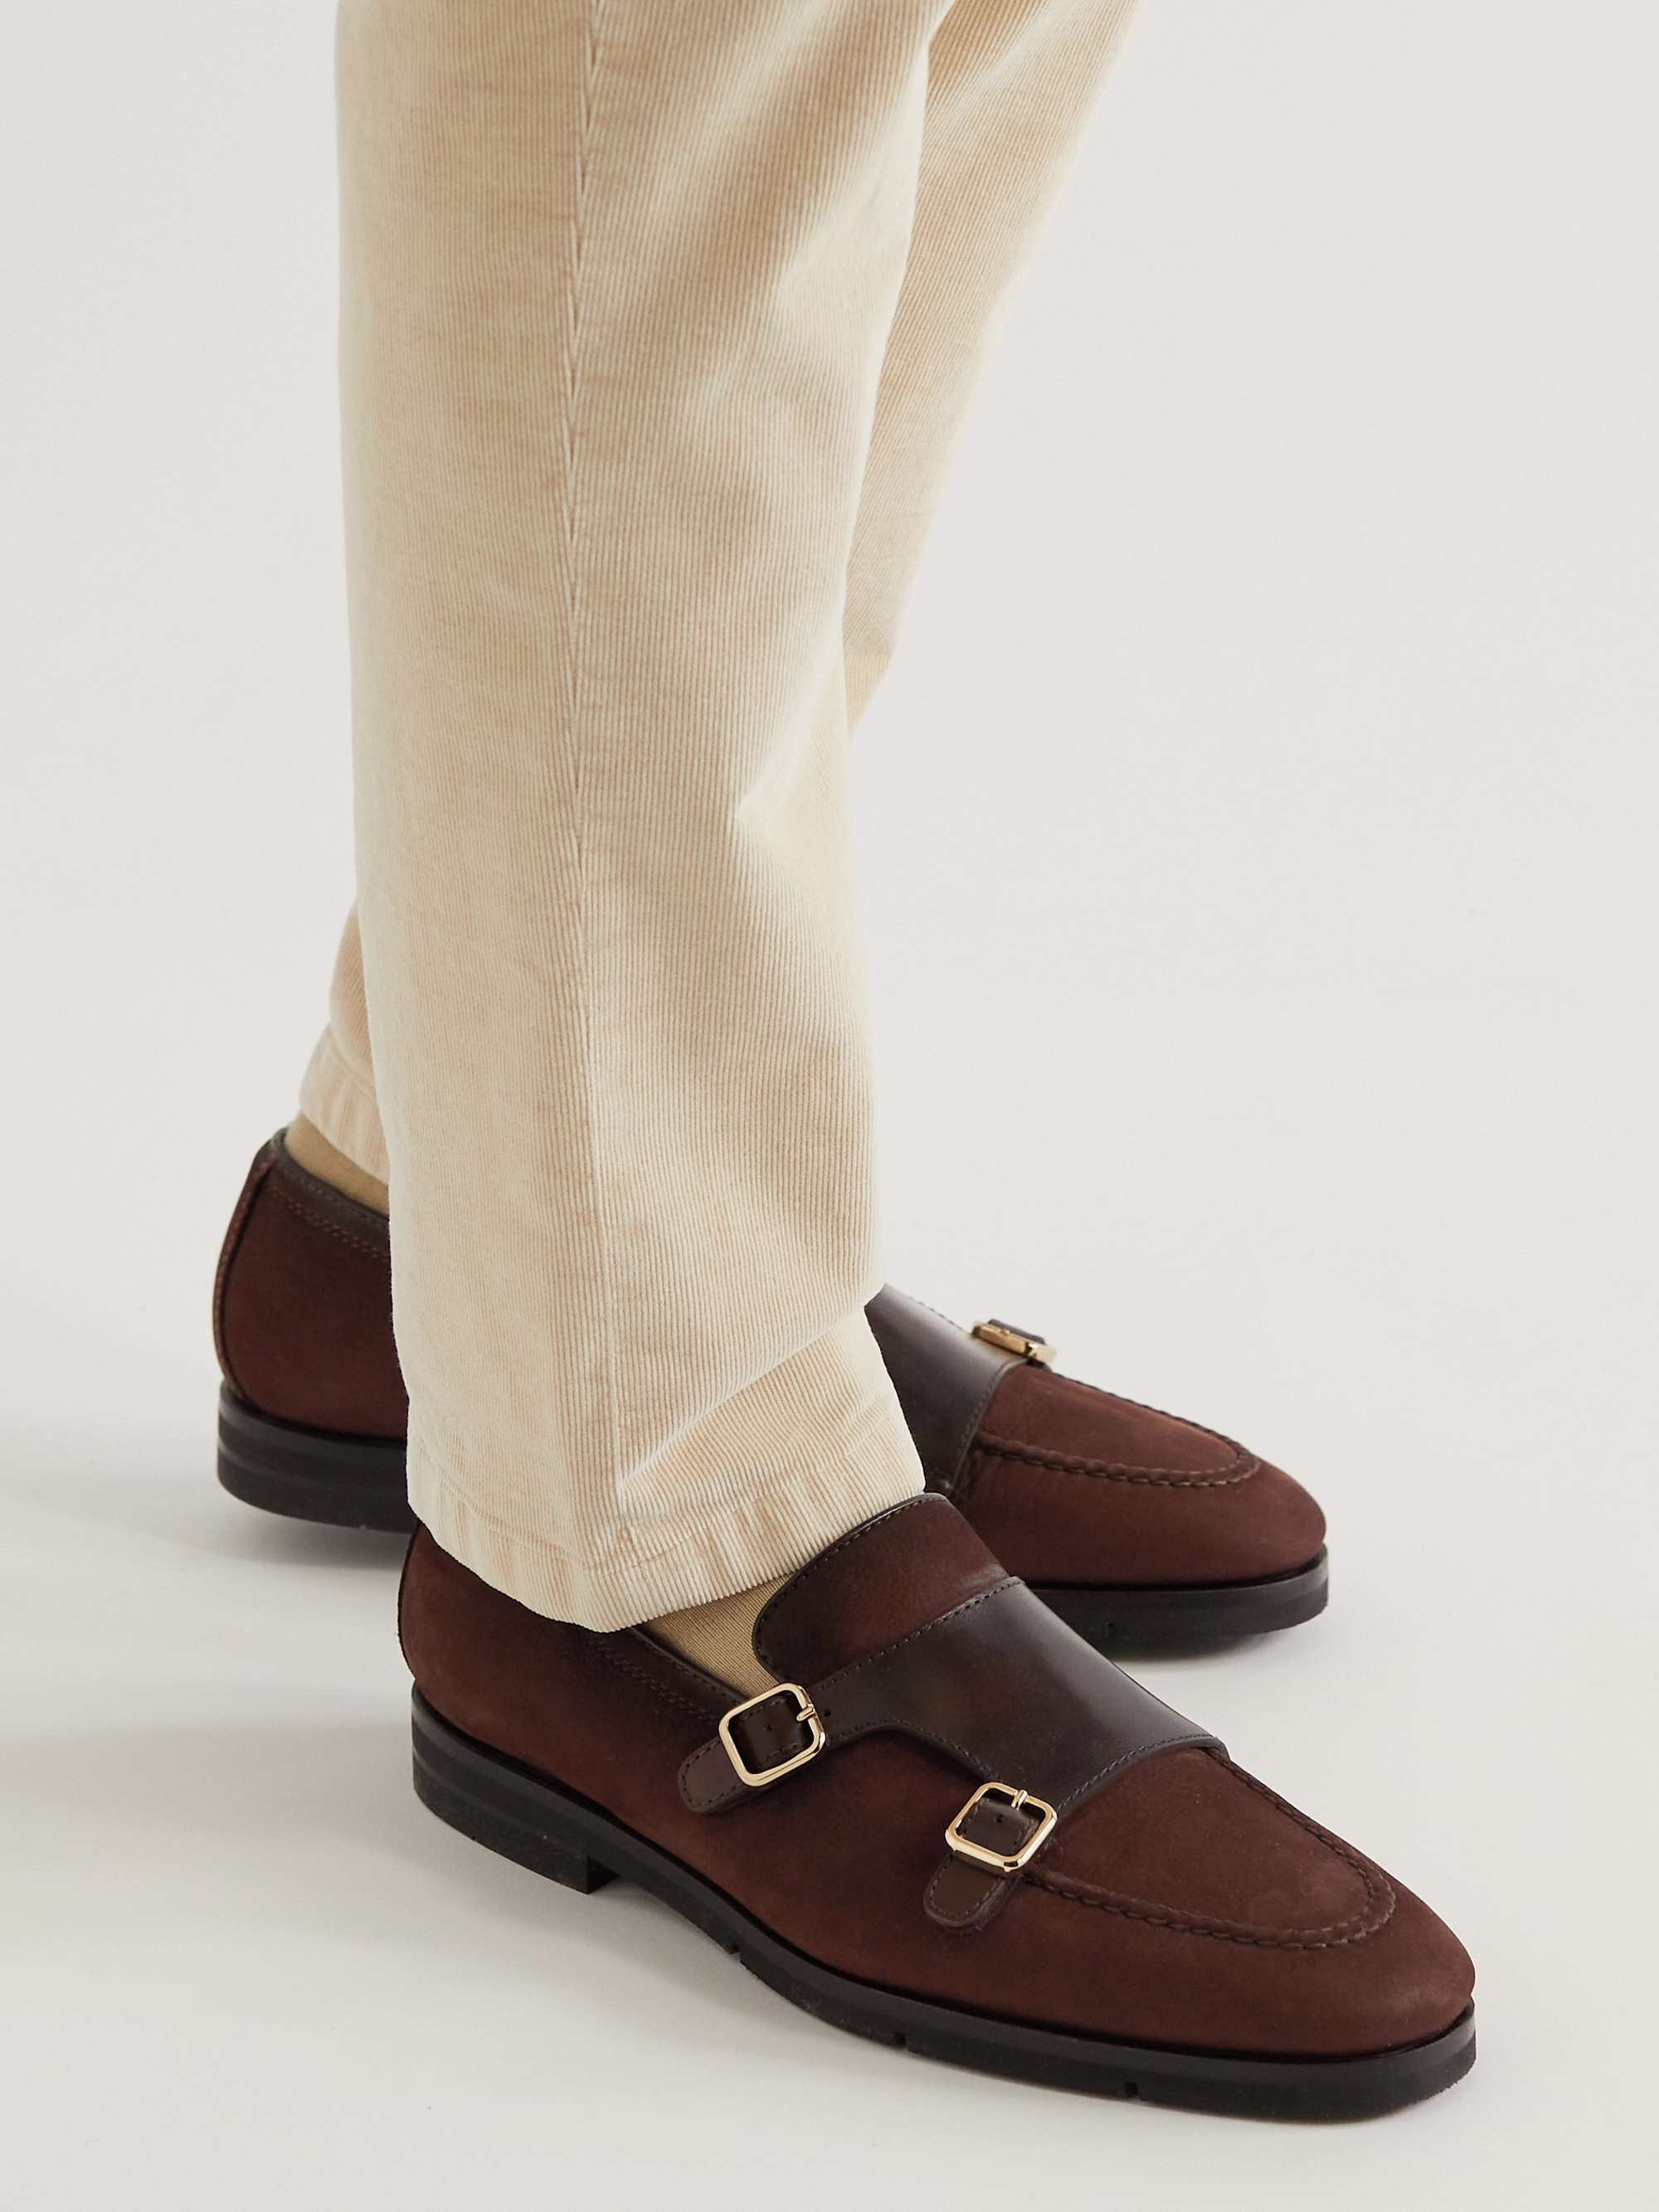 SANTONI Leather-Trimmed Suede Monk-Strap Shoes